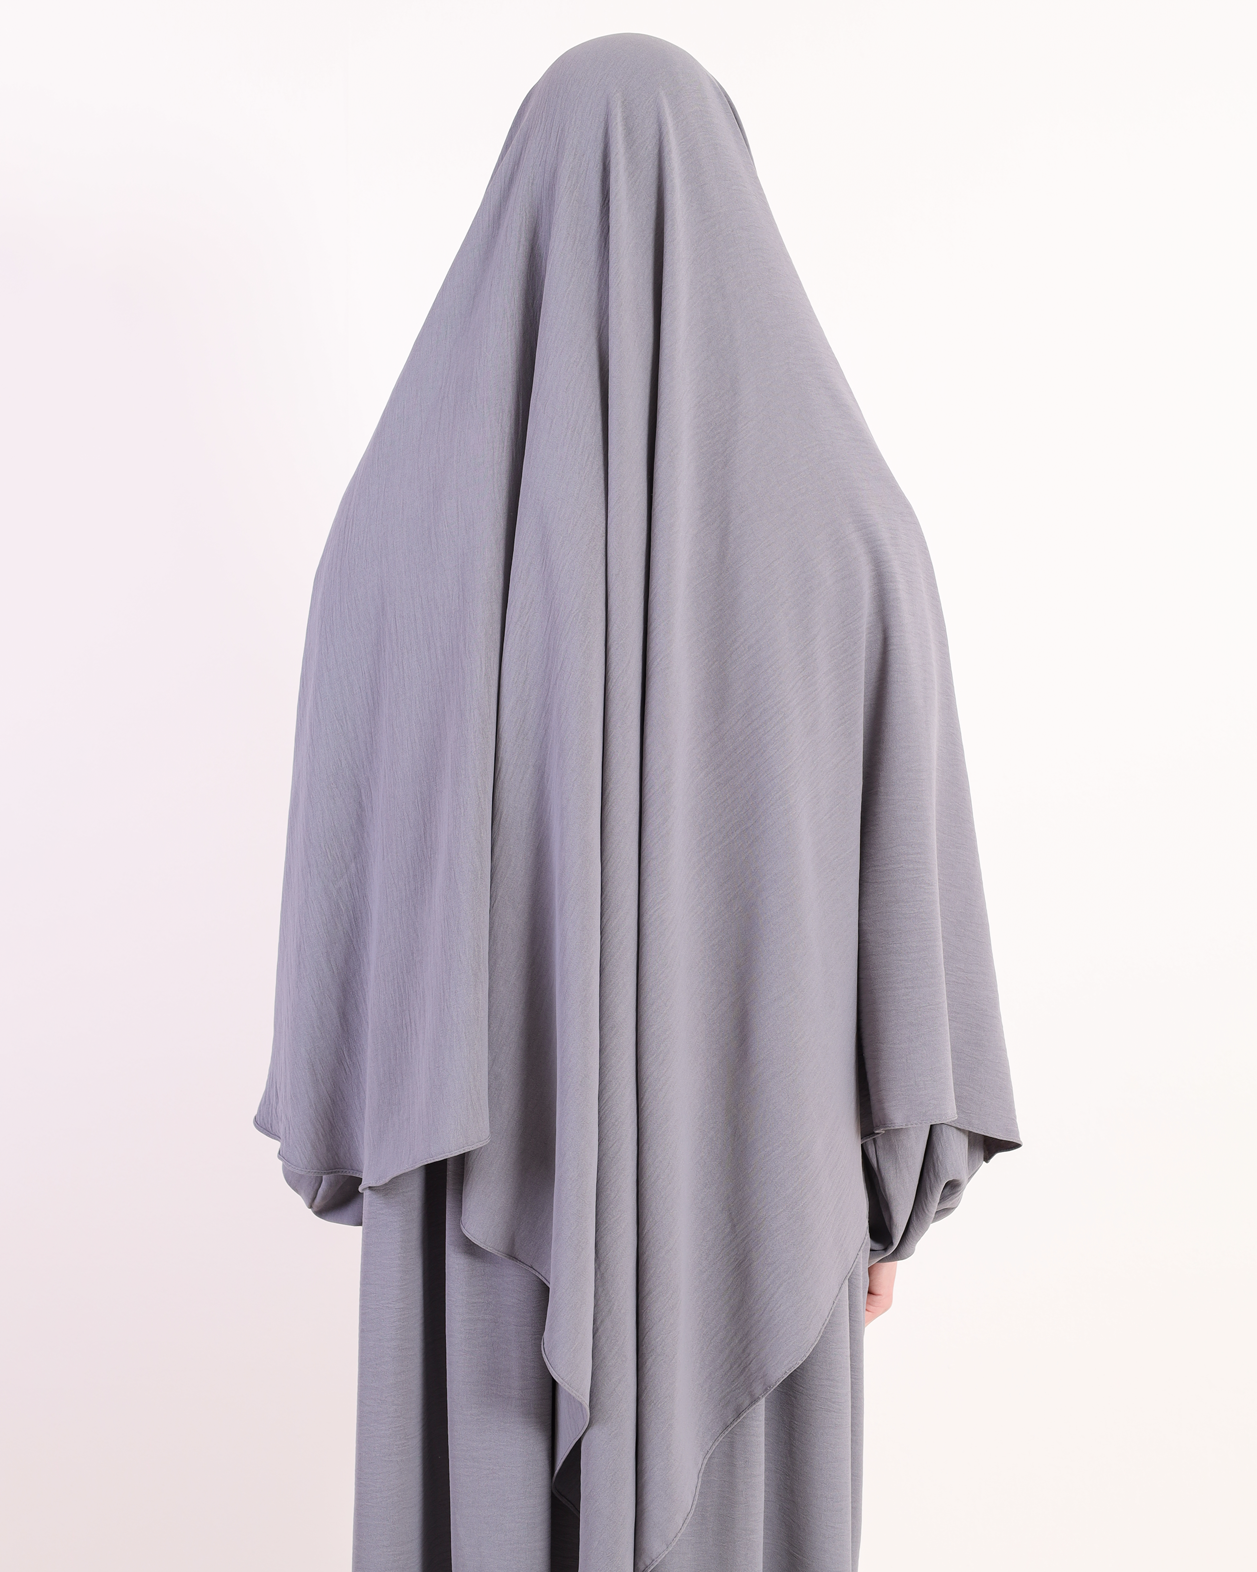 Light Grey French Hijab